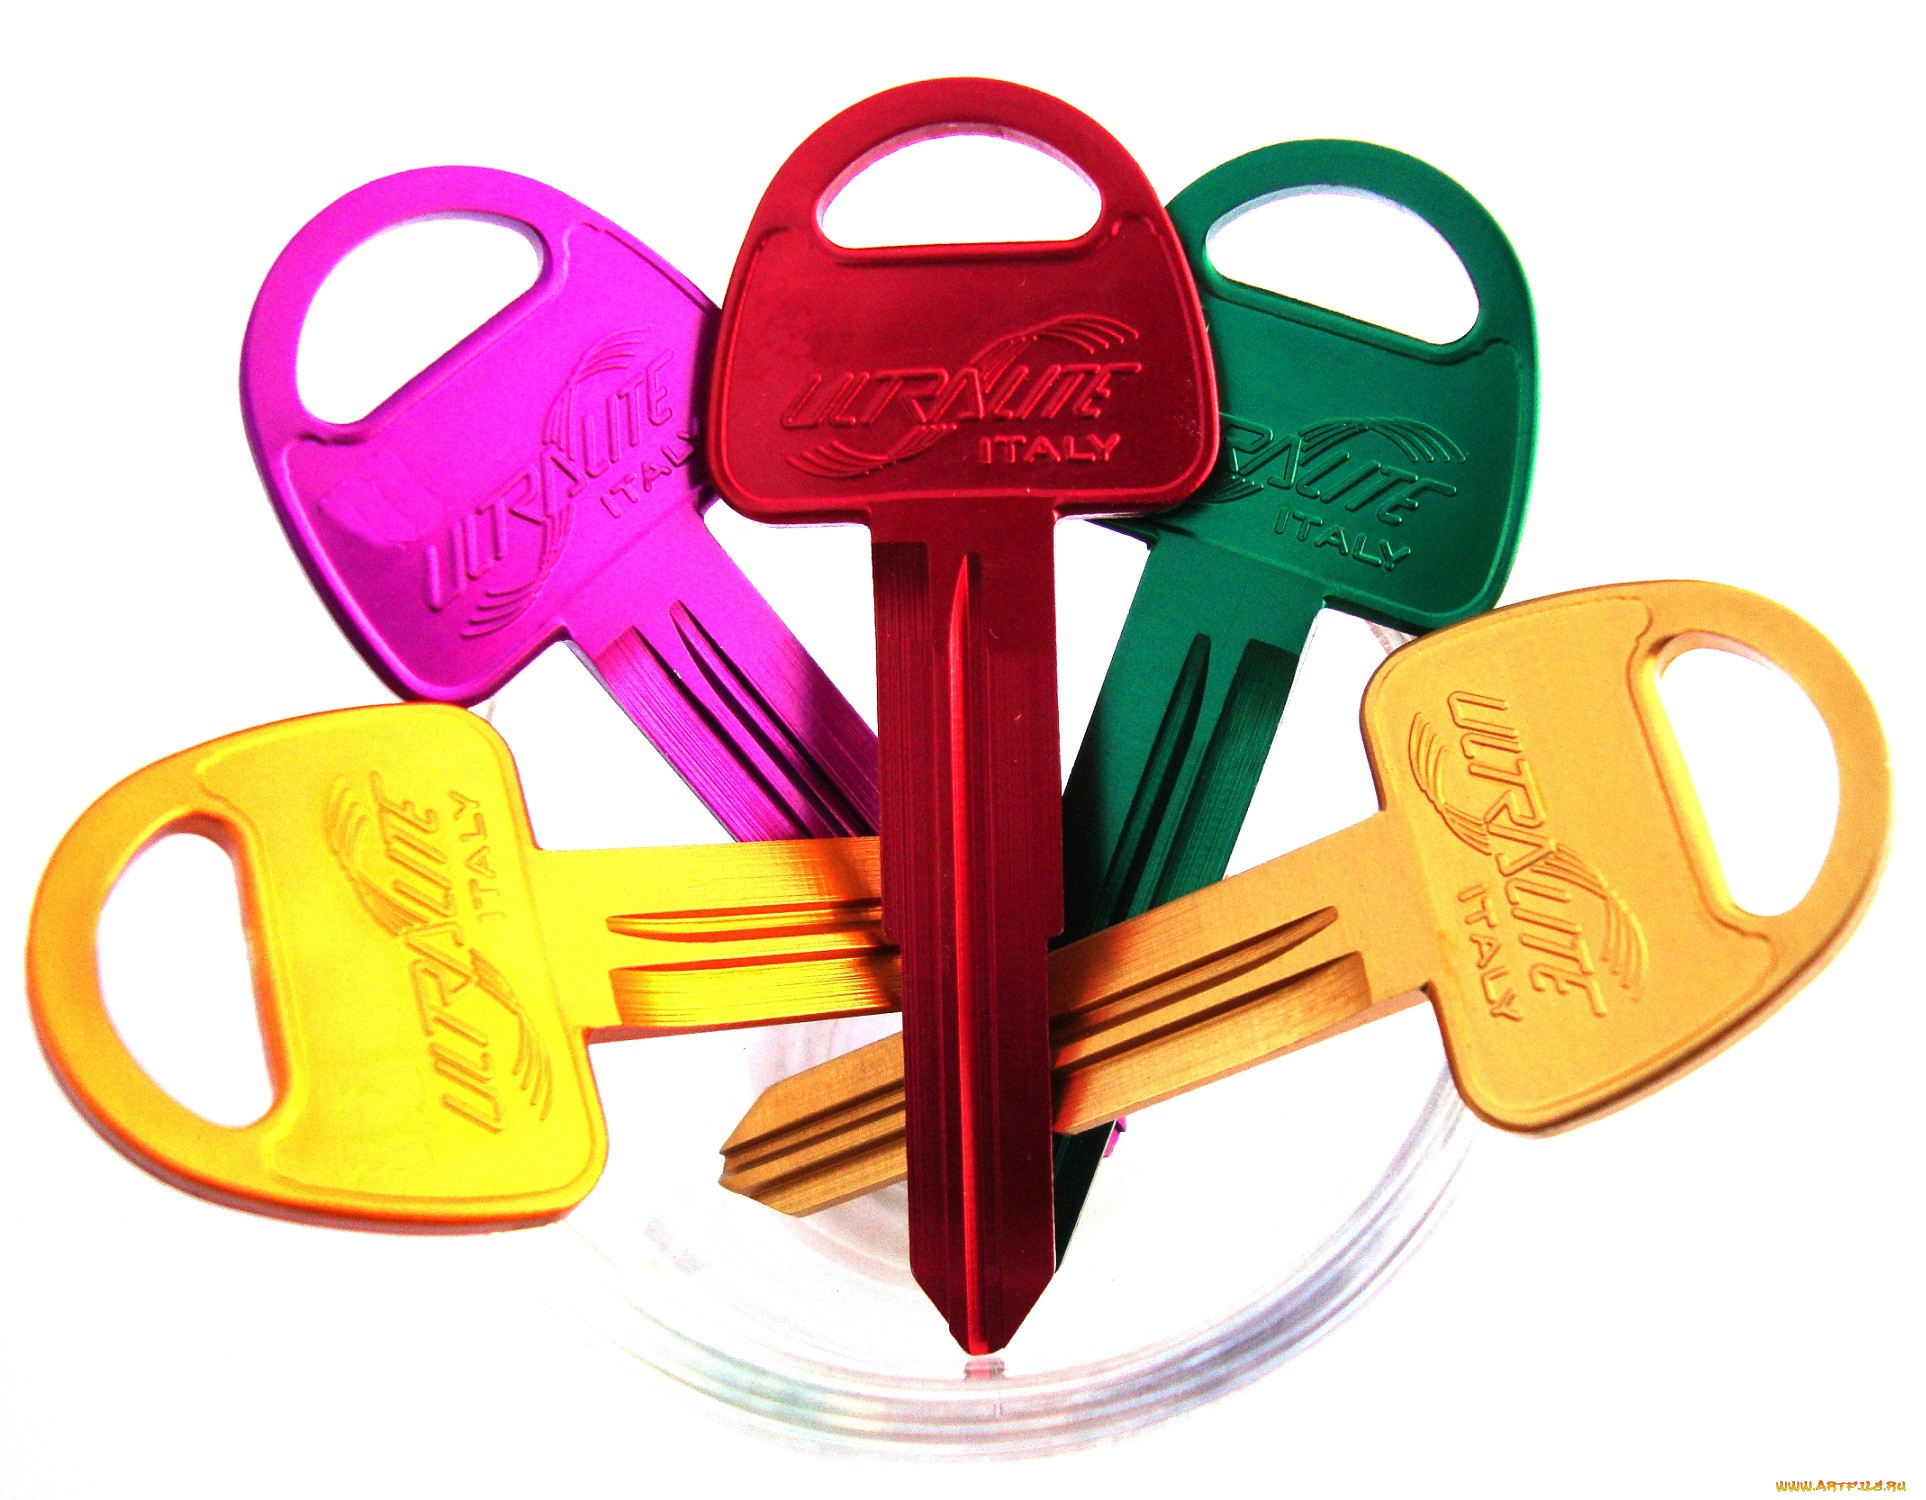 Keys picture. Цветные ключи. Ключи разные. Цветные ключики. Цветные ключи для детей.